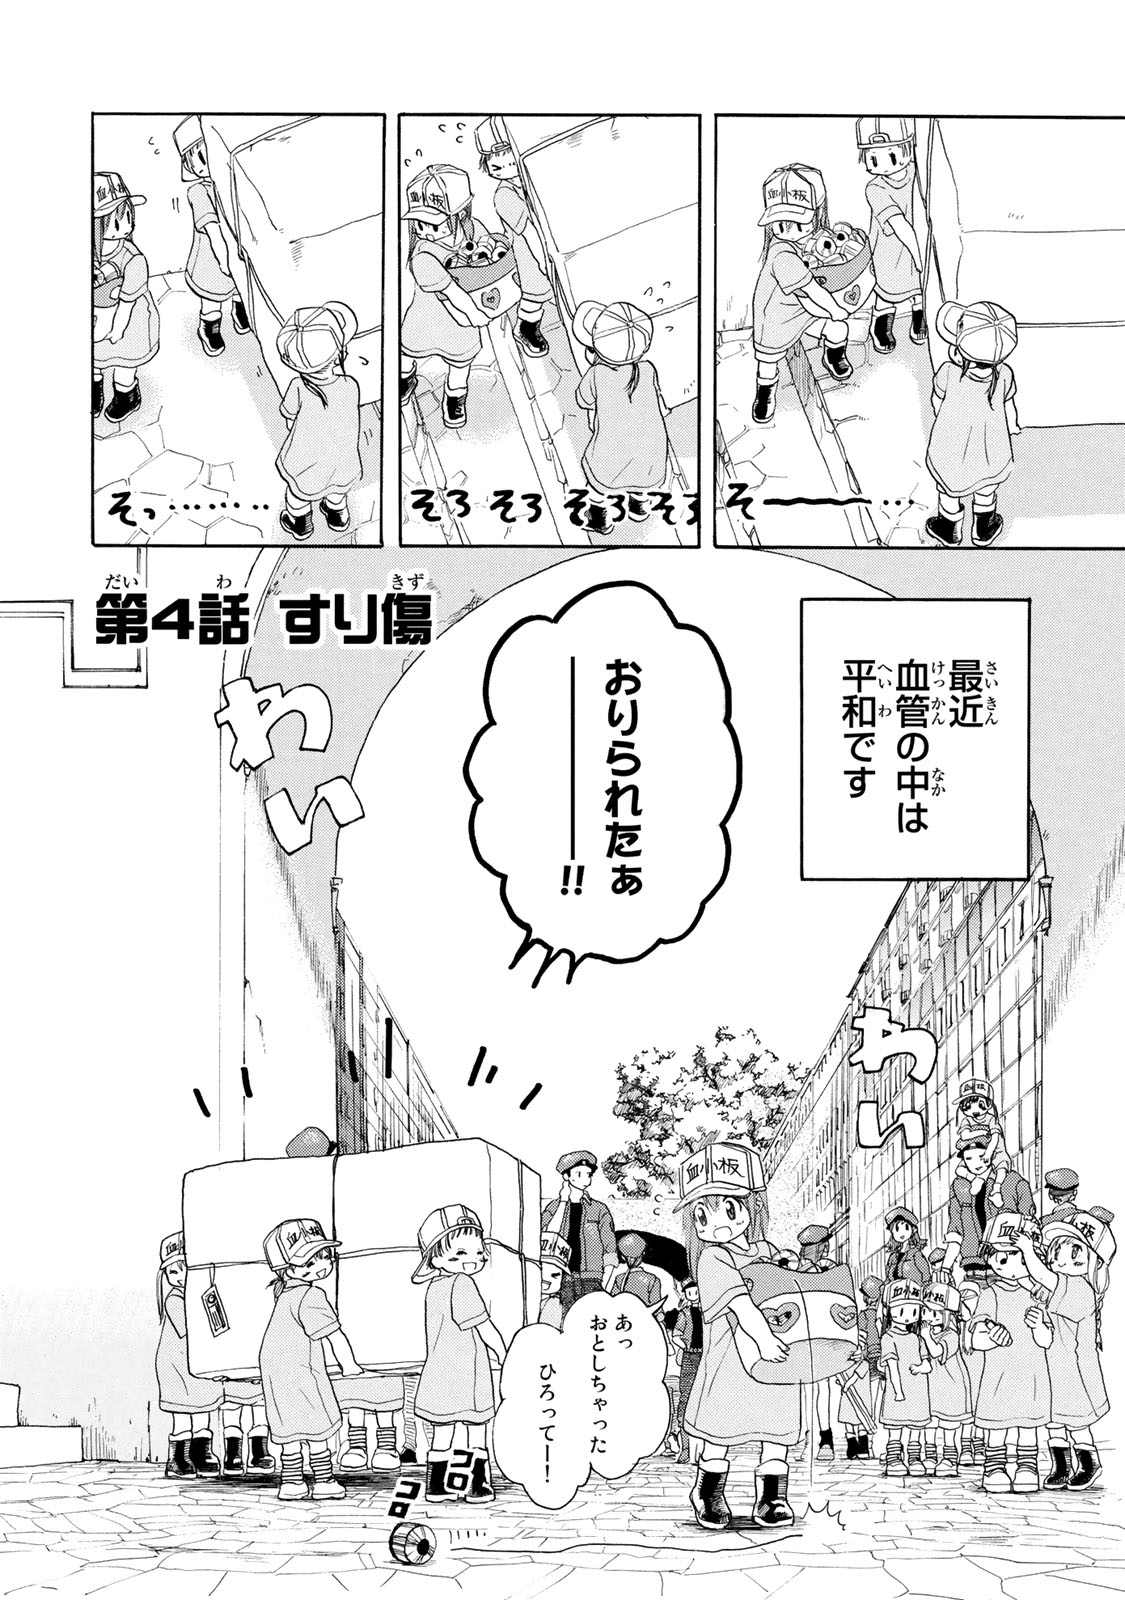 Hataraku Saibou - Chapter 4 - Page 2